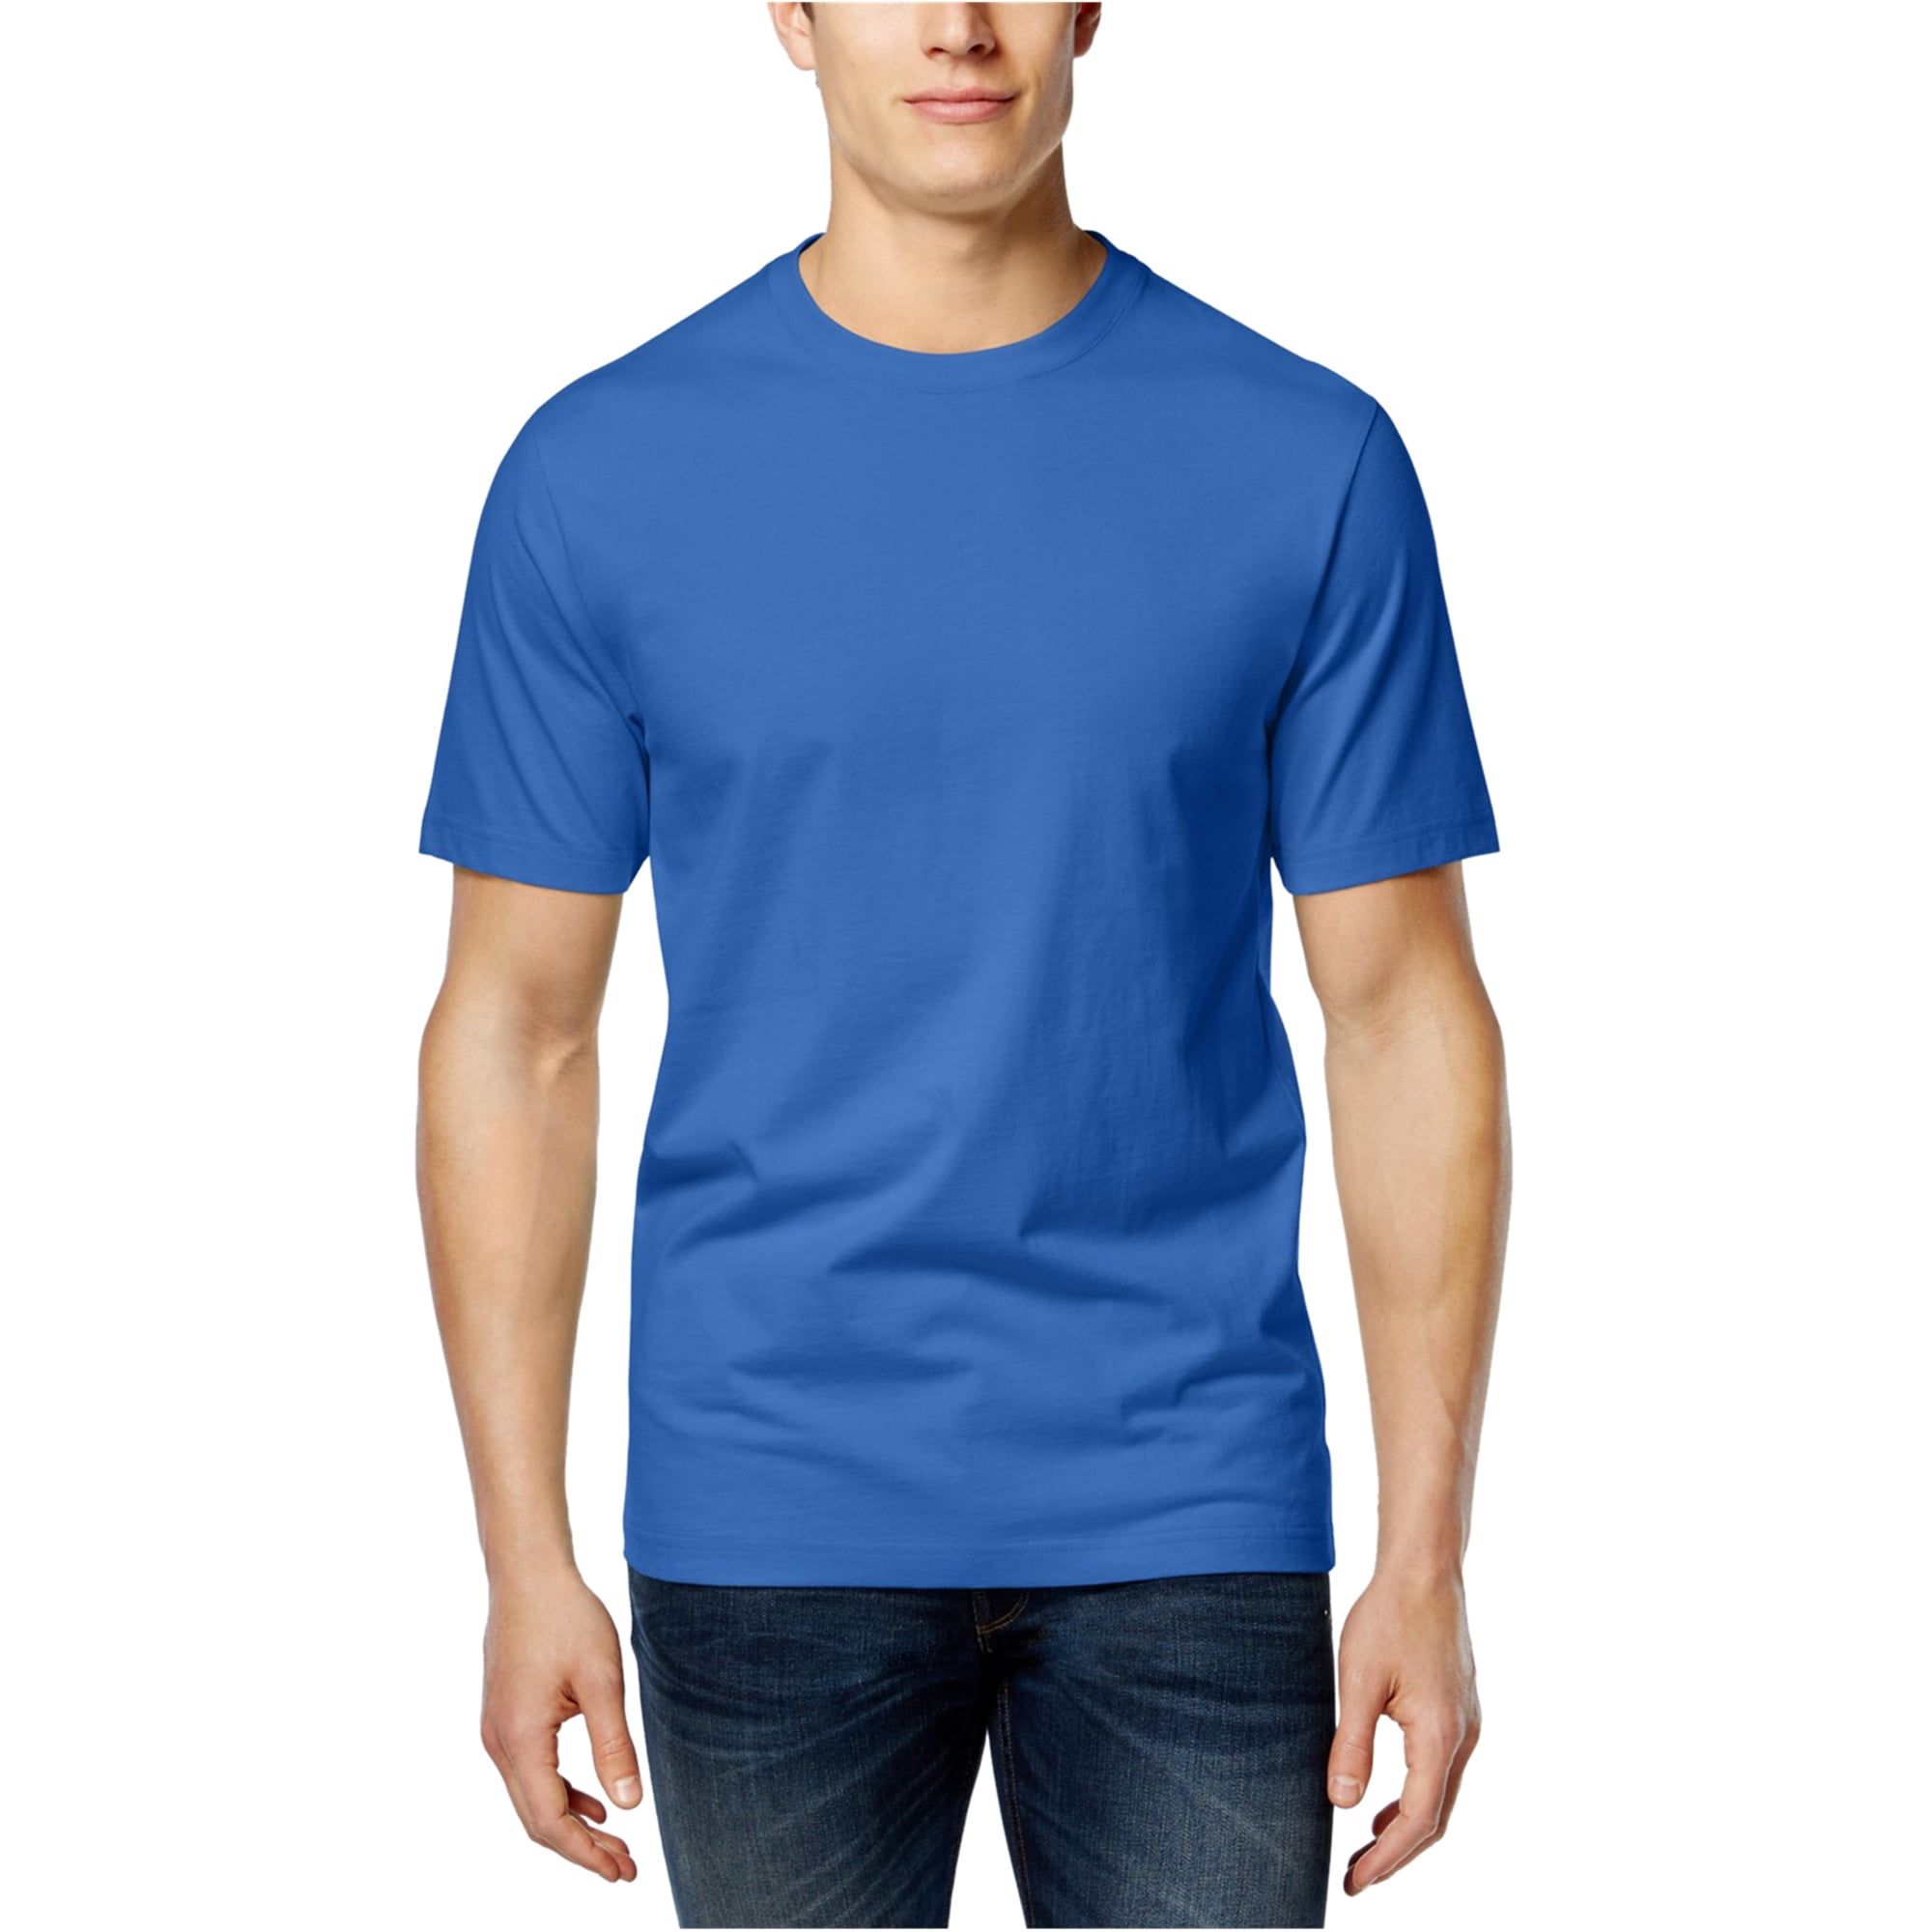 Club Room Mens Crew Neck Basic T-Shirt, Blue, Small - Walmart.com